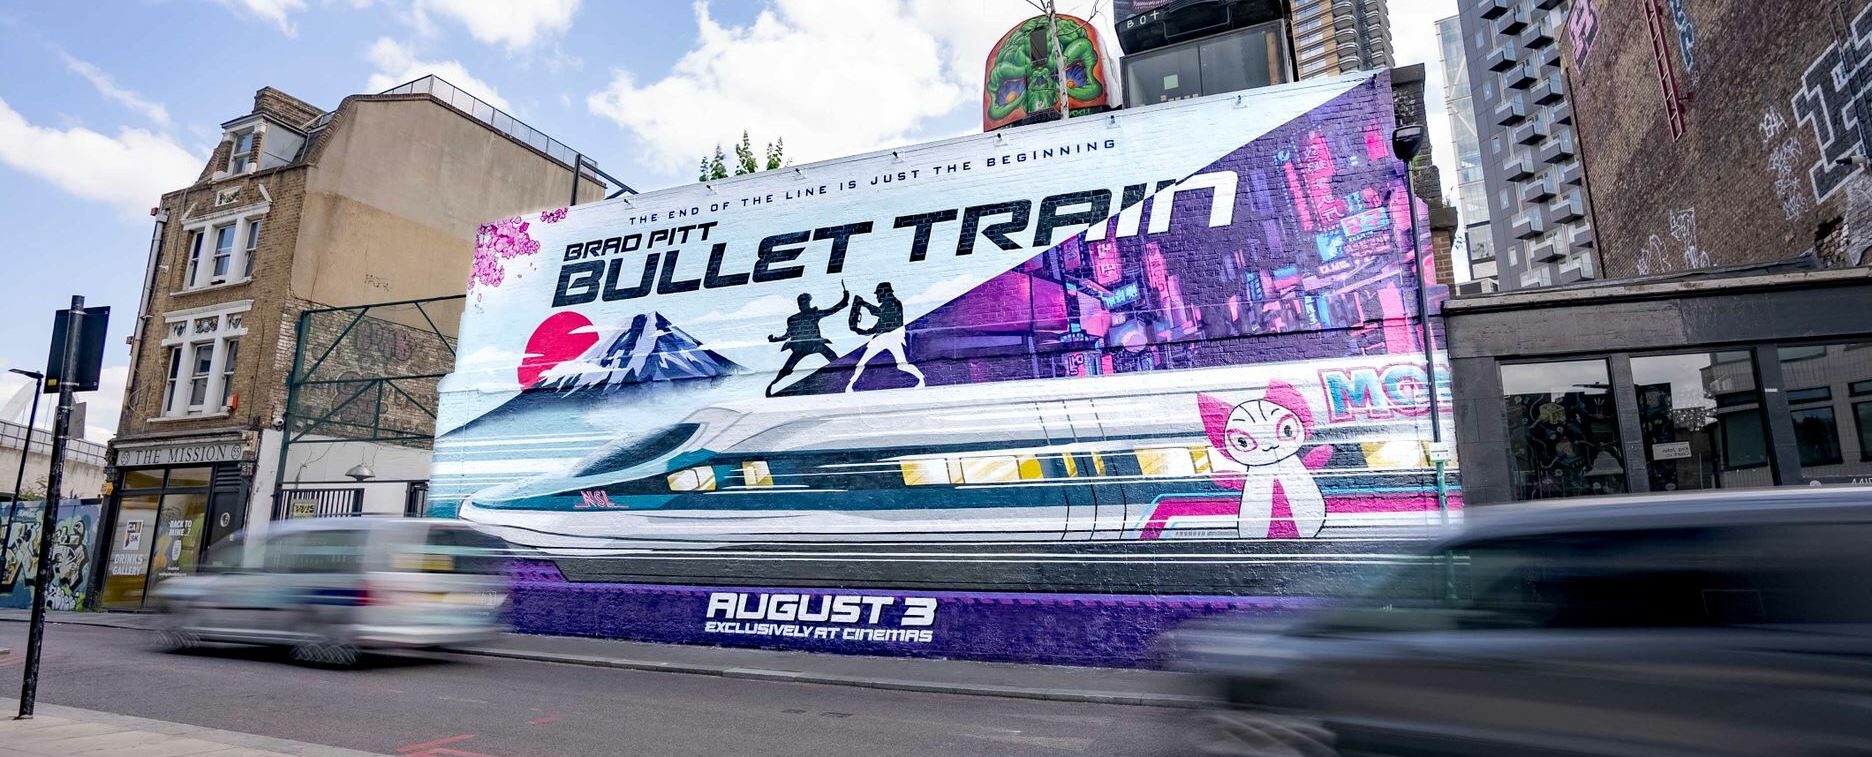 Bullet Train 2 (4)